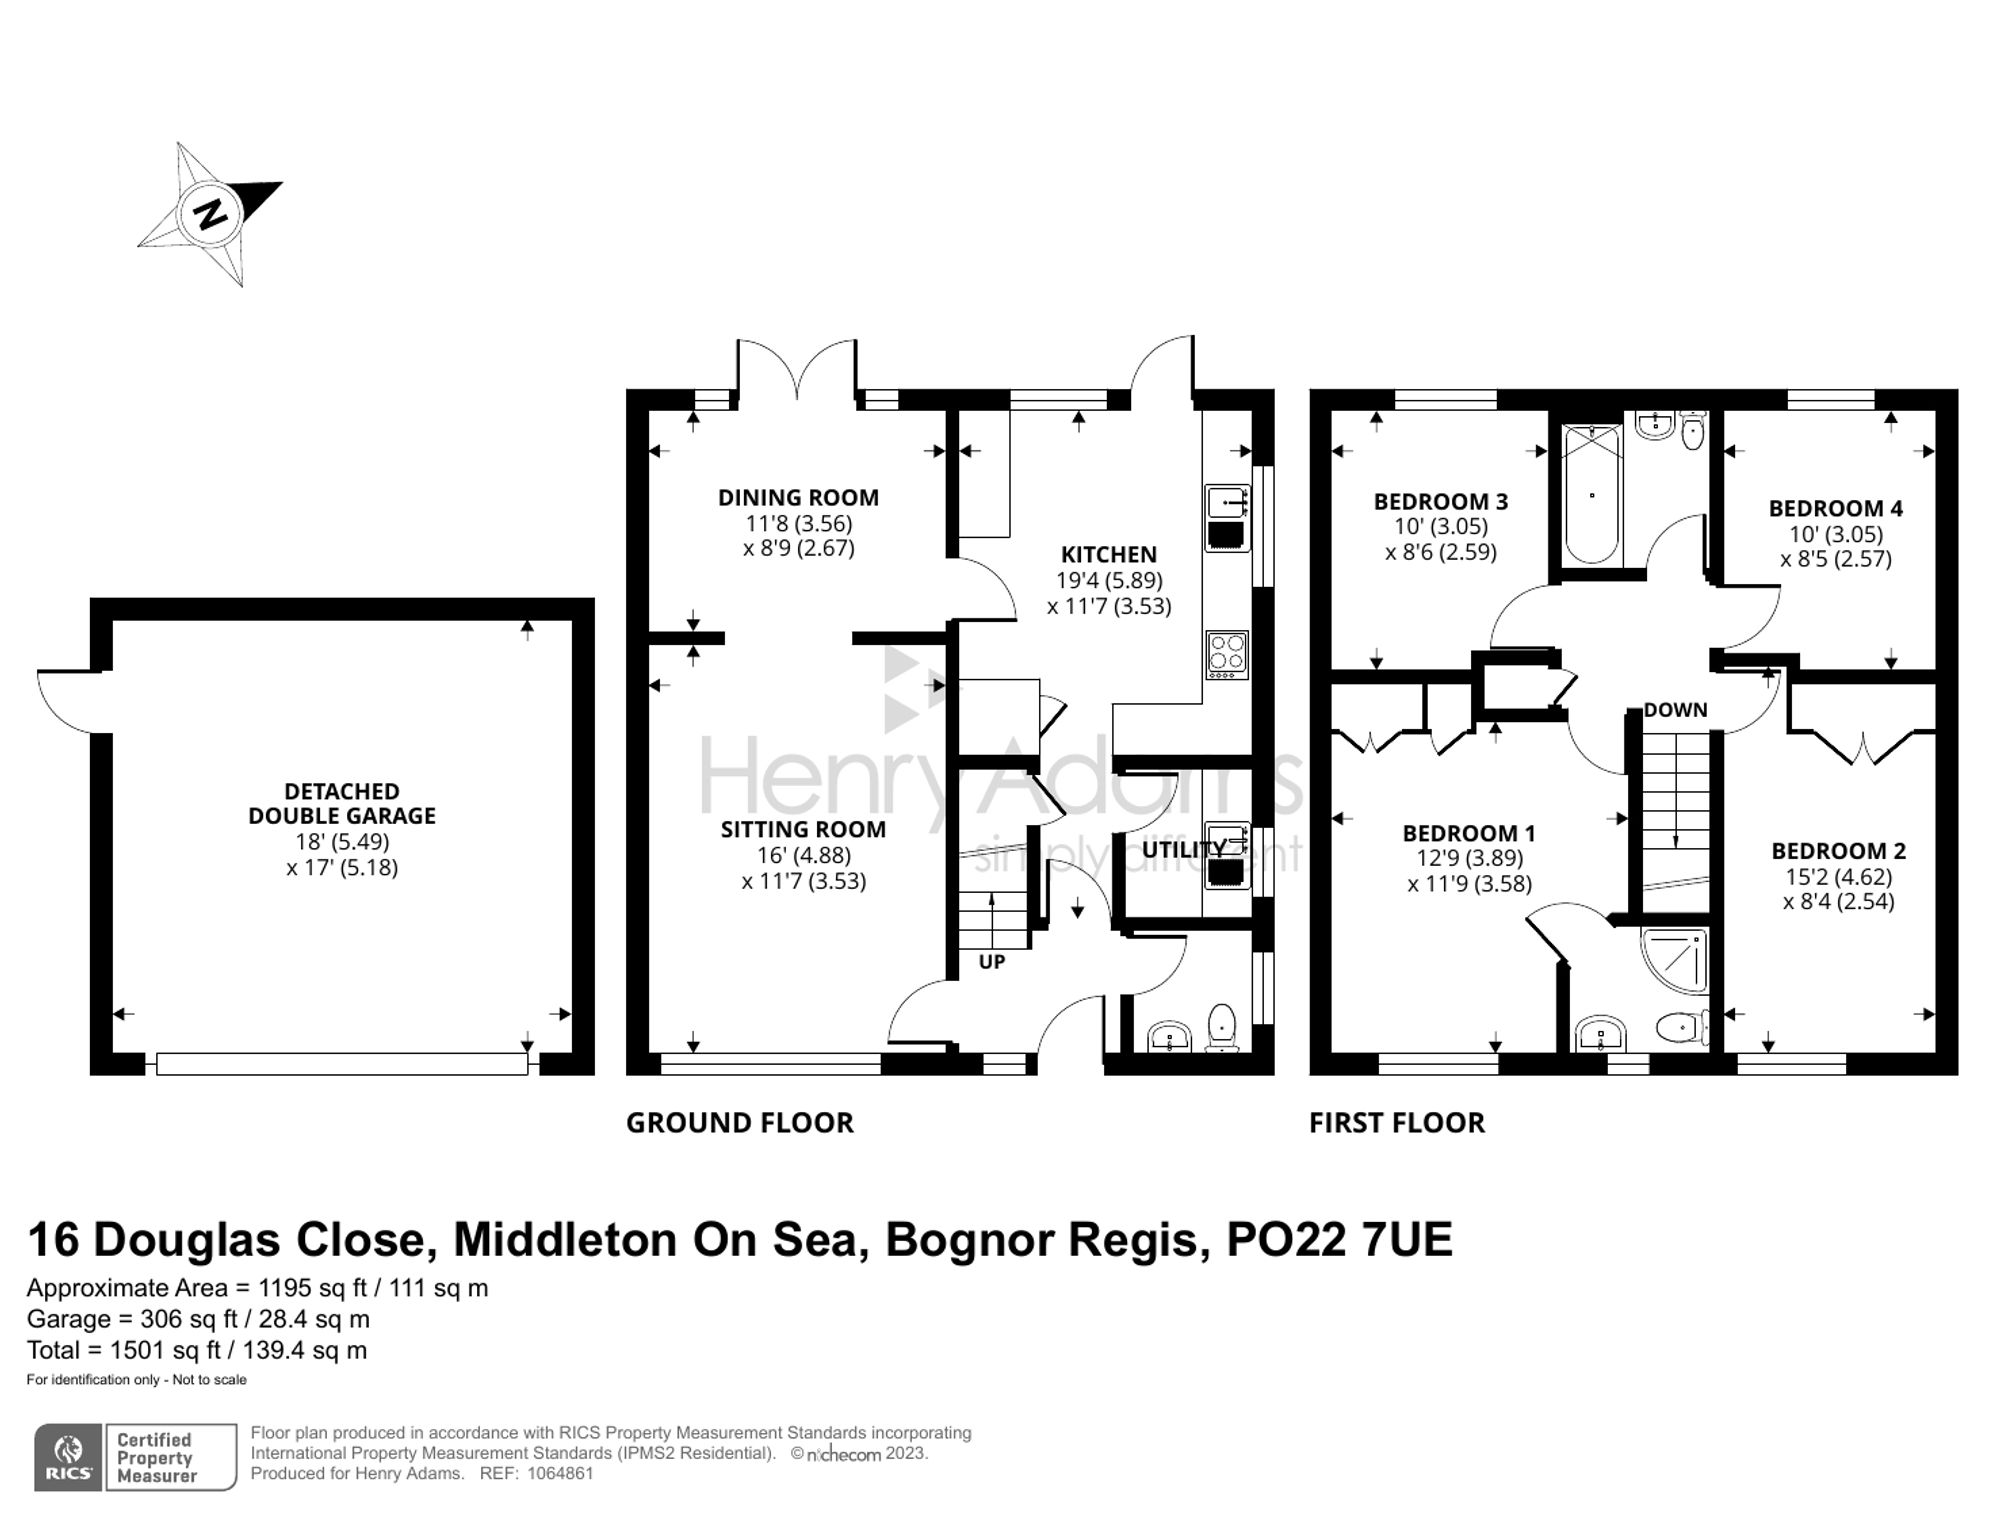 Douglas Close, Middleton-On-Sea, PO22 floorplans